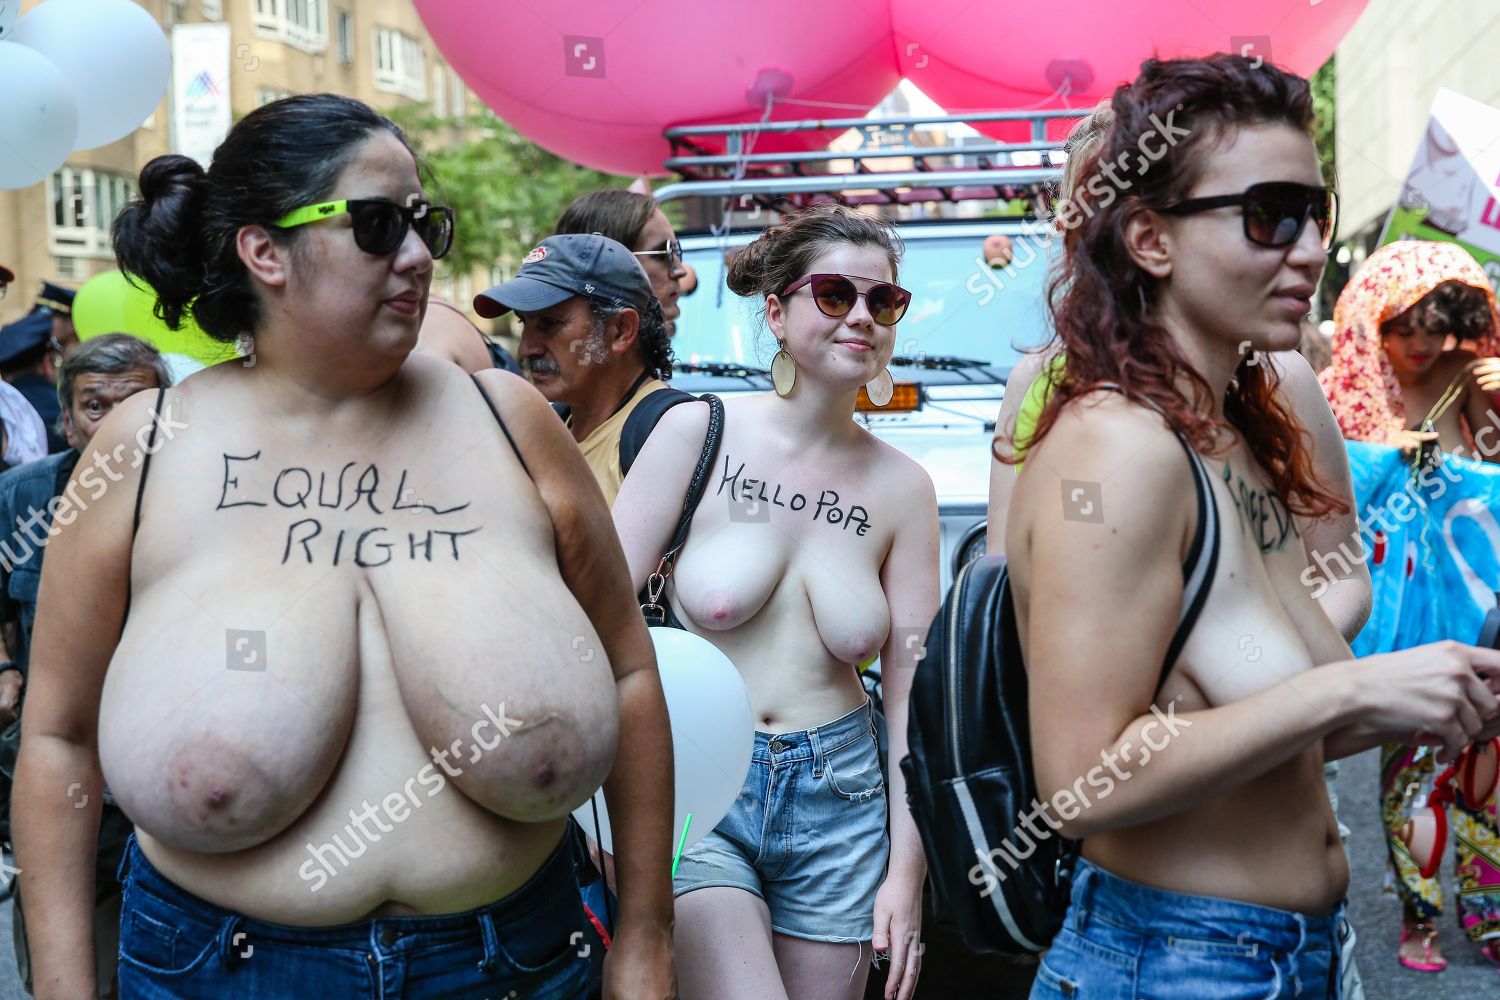 Rate ny boobs - 🧡 Topless activists parade through New York City Daily Mai...